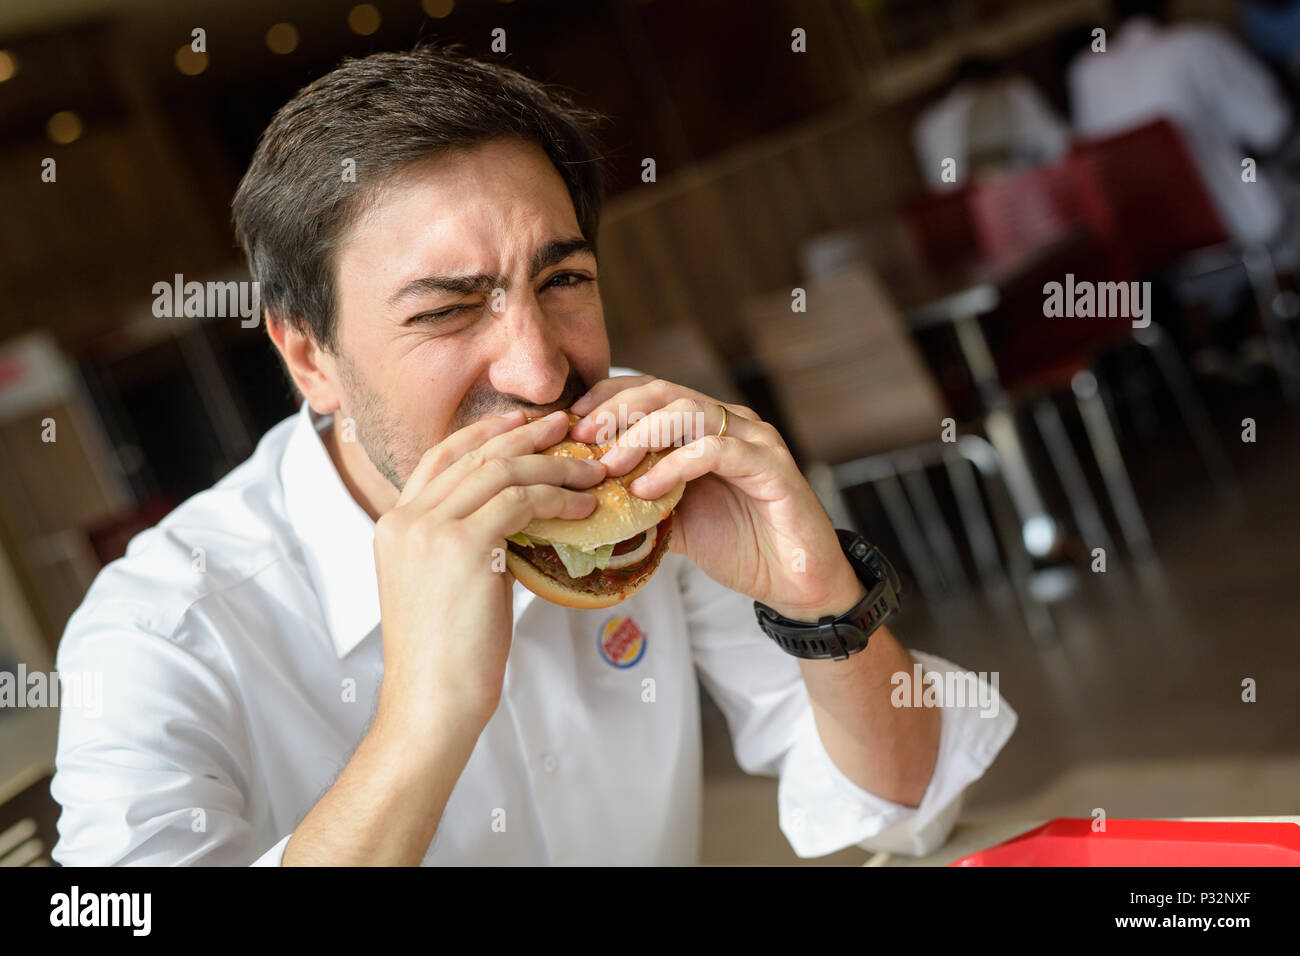 15 June 2018, Germany, Munich: Carlos Eduardo Baron, Burger King's manager in Germany, eats a burger during an interview. Photo: Matthias Balk/dpa Stock Photo